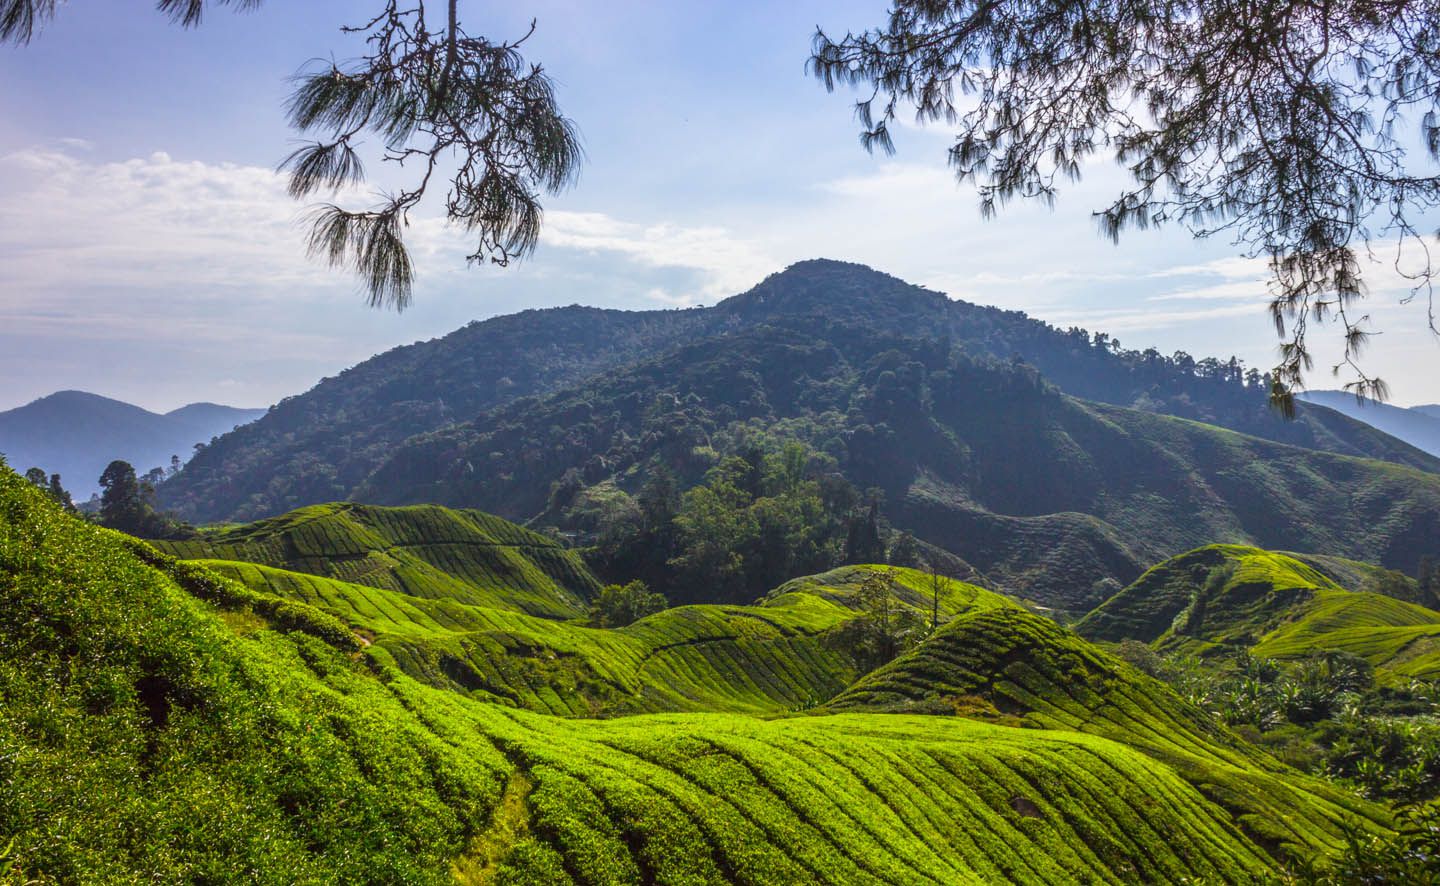 Overlooking the Boh tea plantation, Cameron Highlands, Malaysia